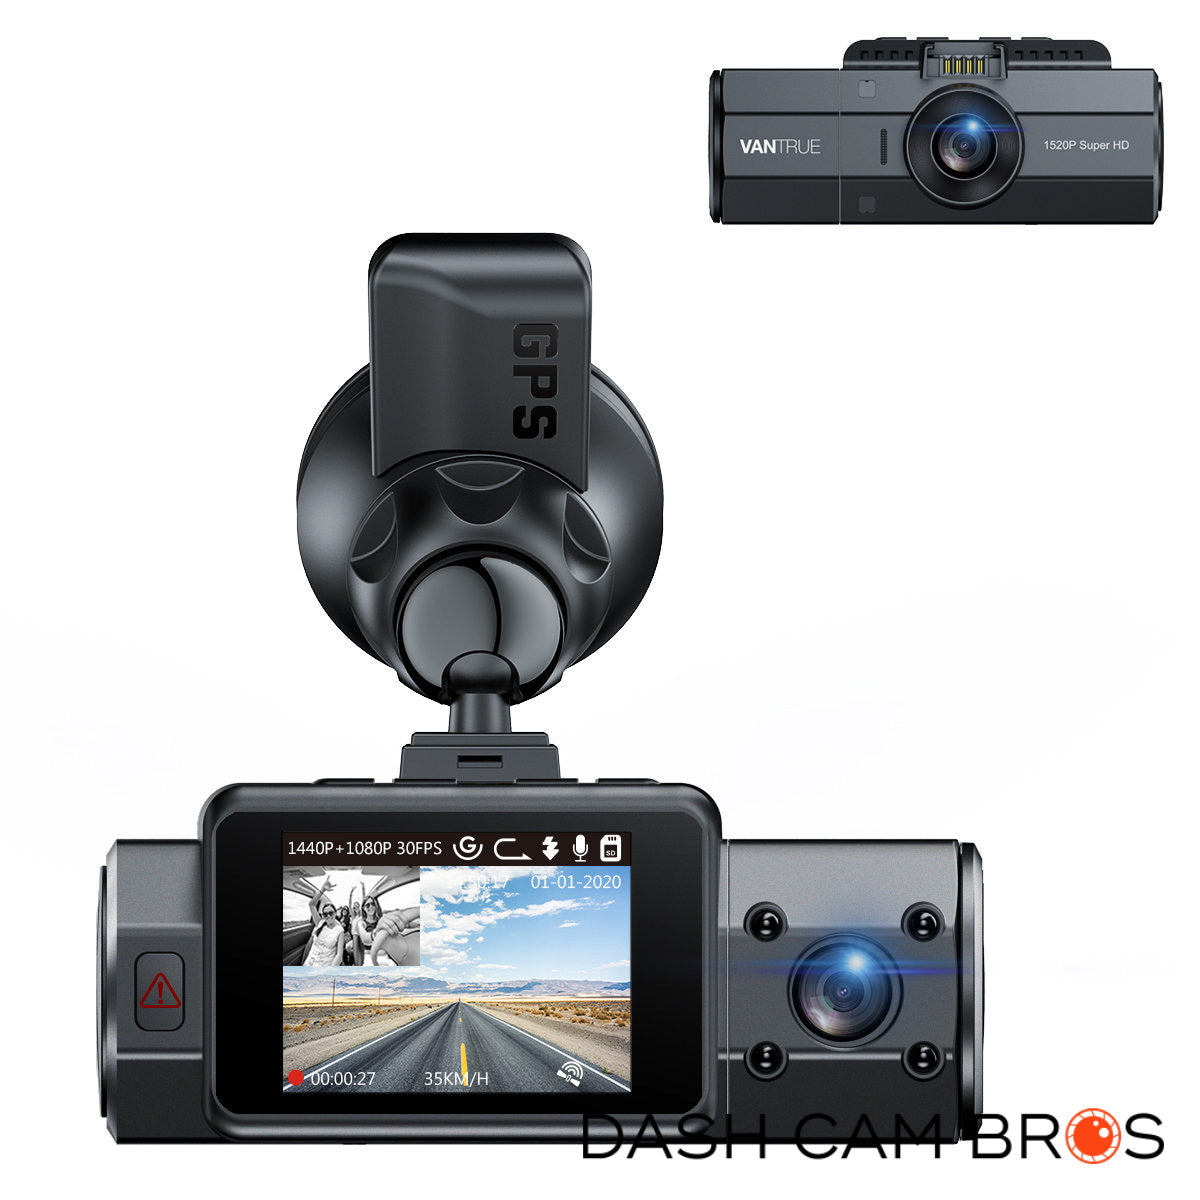 Vantrue N2 Pro Review - The Worlds First Dual 1080P Dashcam 